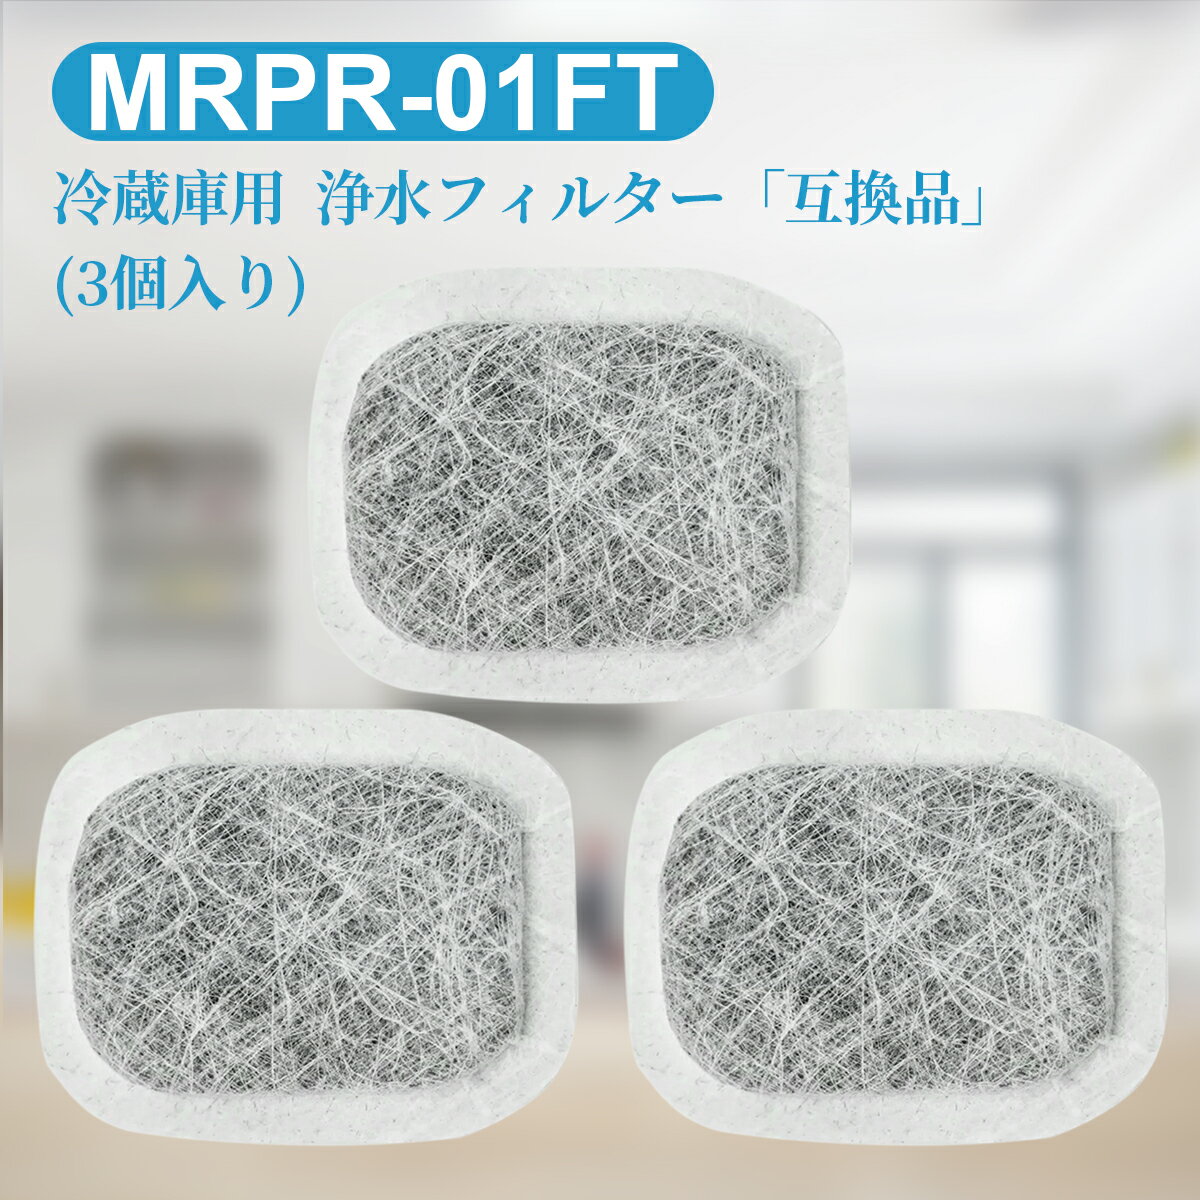 MRPR-01FT 冷蔵庫 フィルター カルキクリーンフィルター mrpr-01ft 三菱冷蔵庫 自動製氷用 浄水フィルター「互換品/3個入り」